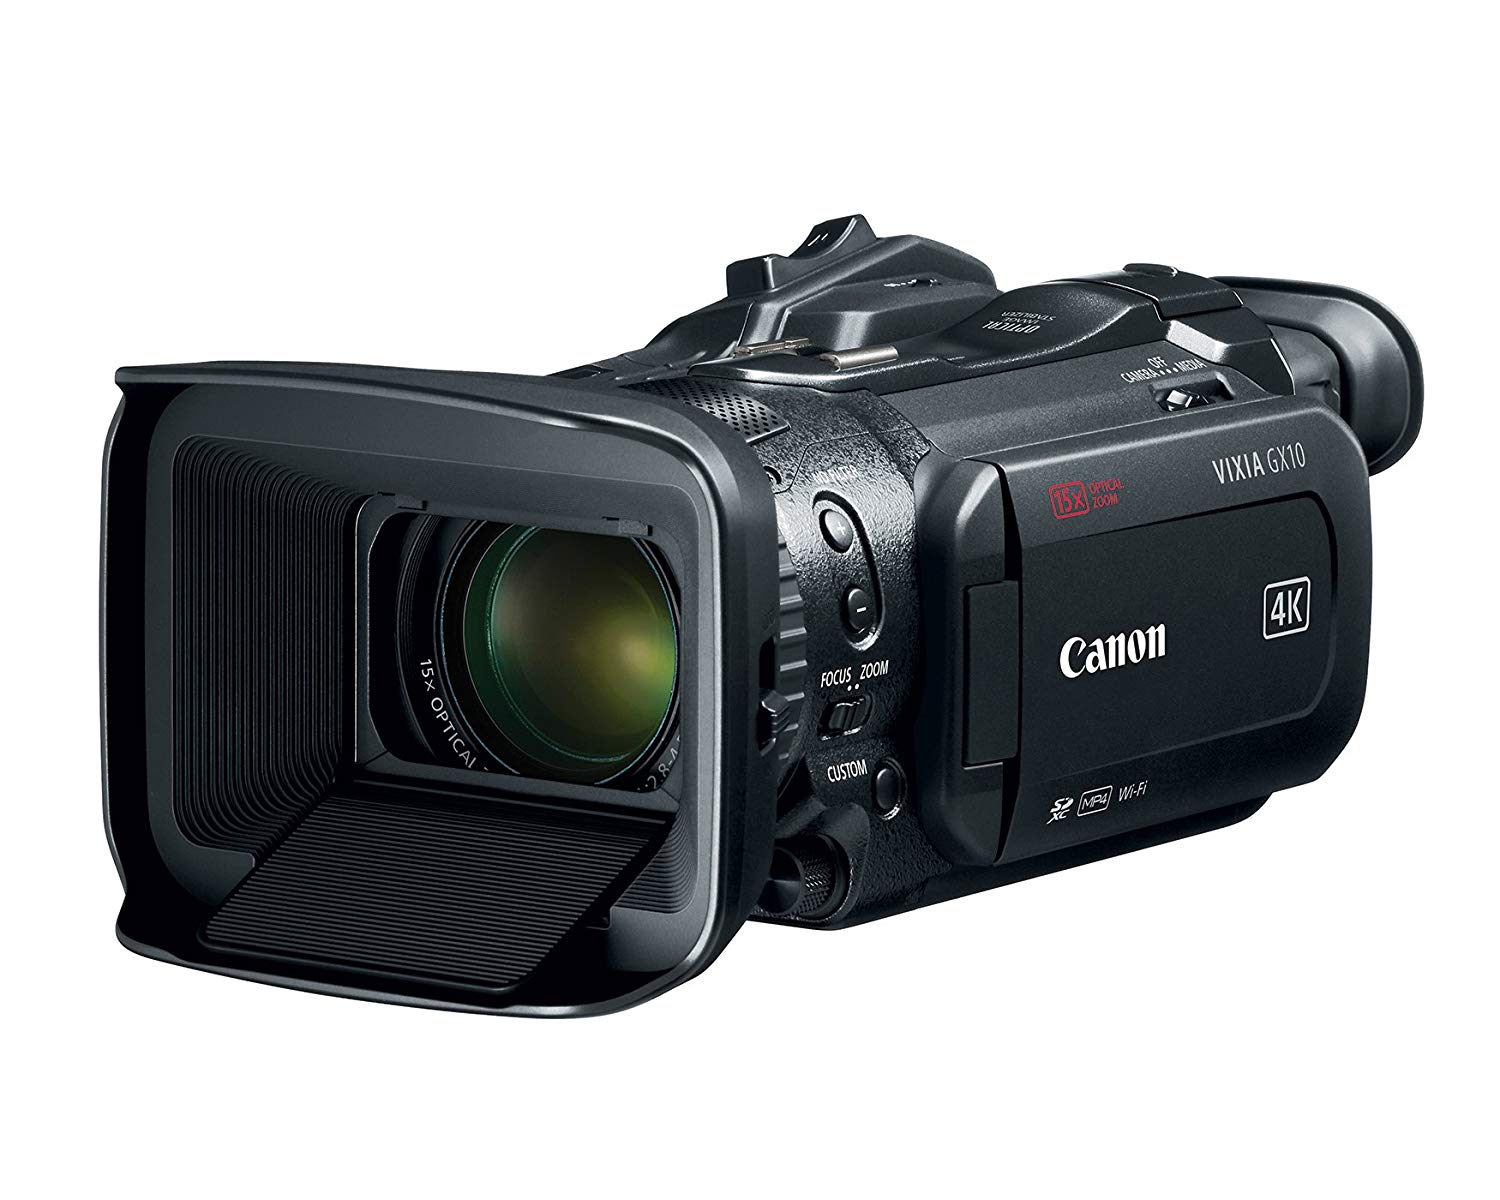 Canon Цифровая видеокамера  Vixia GX10 с Wi-Fi 4K Ultra...